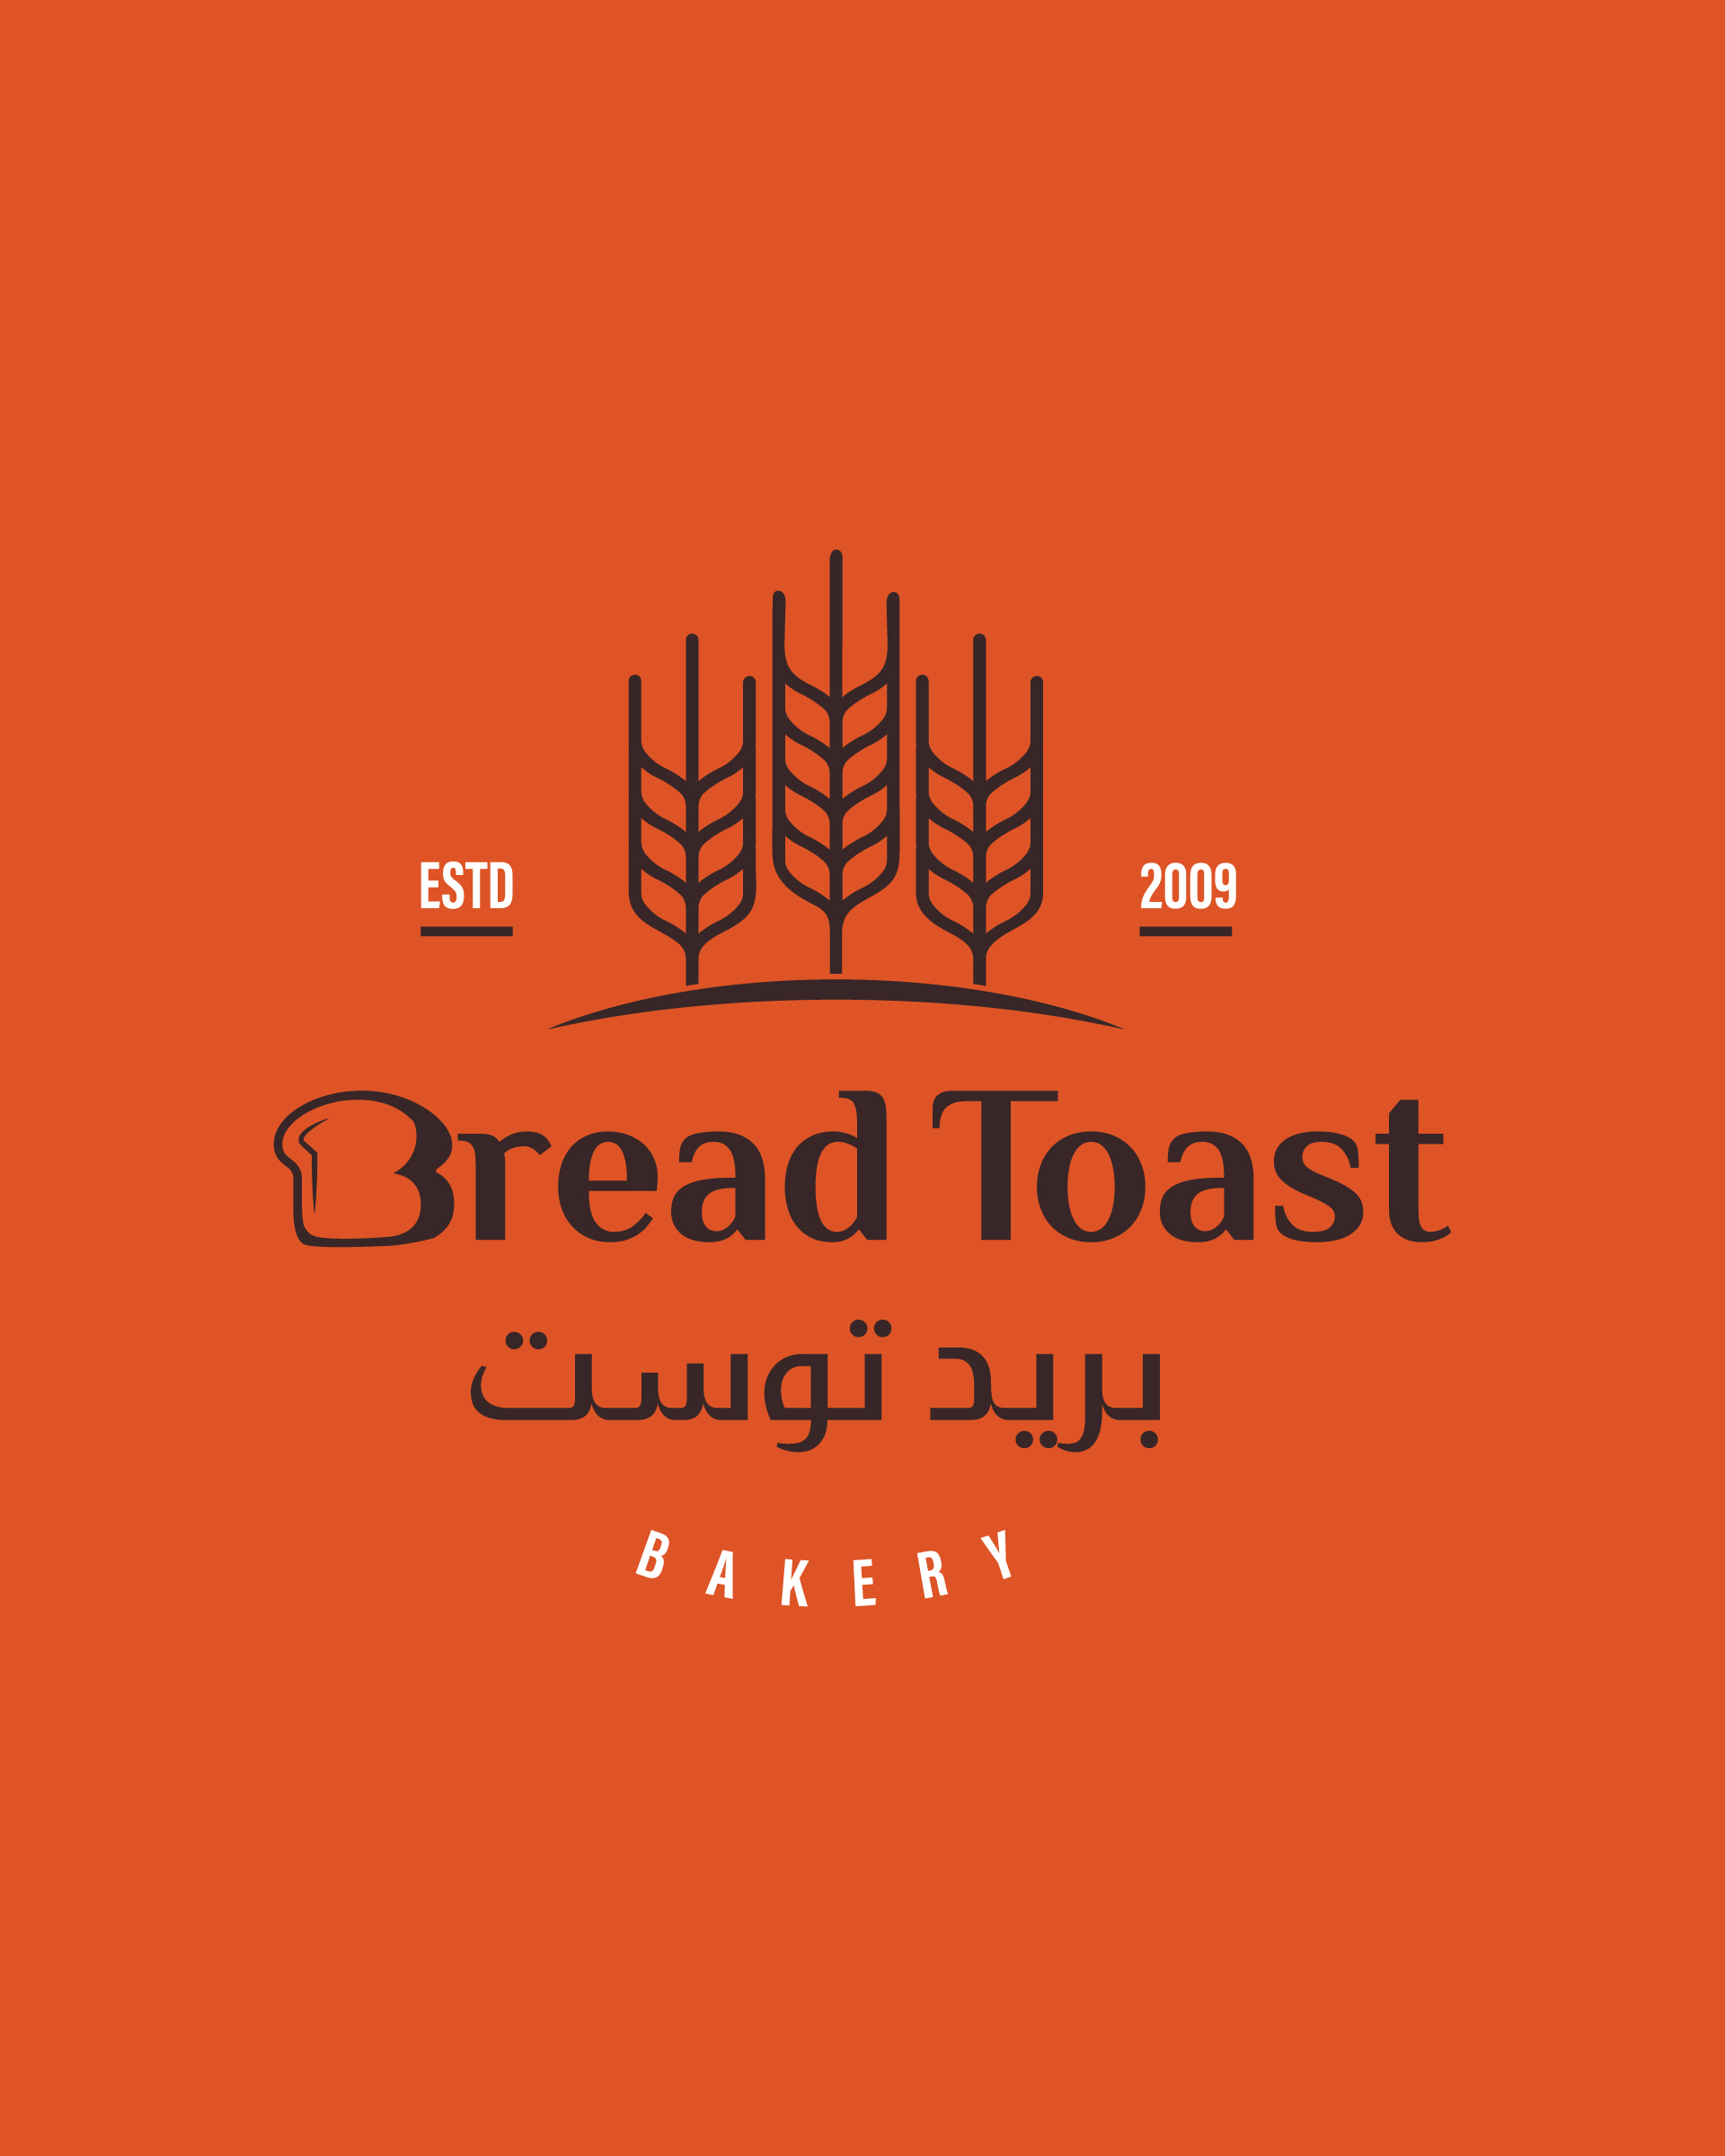 Bread Toast Bakery